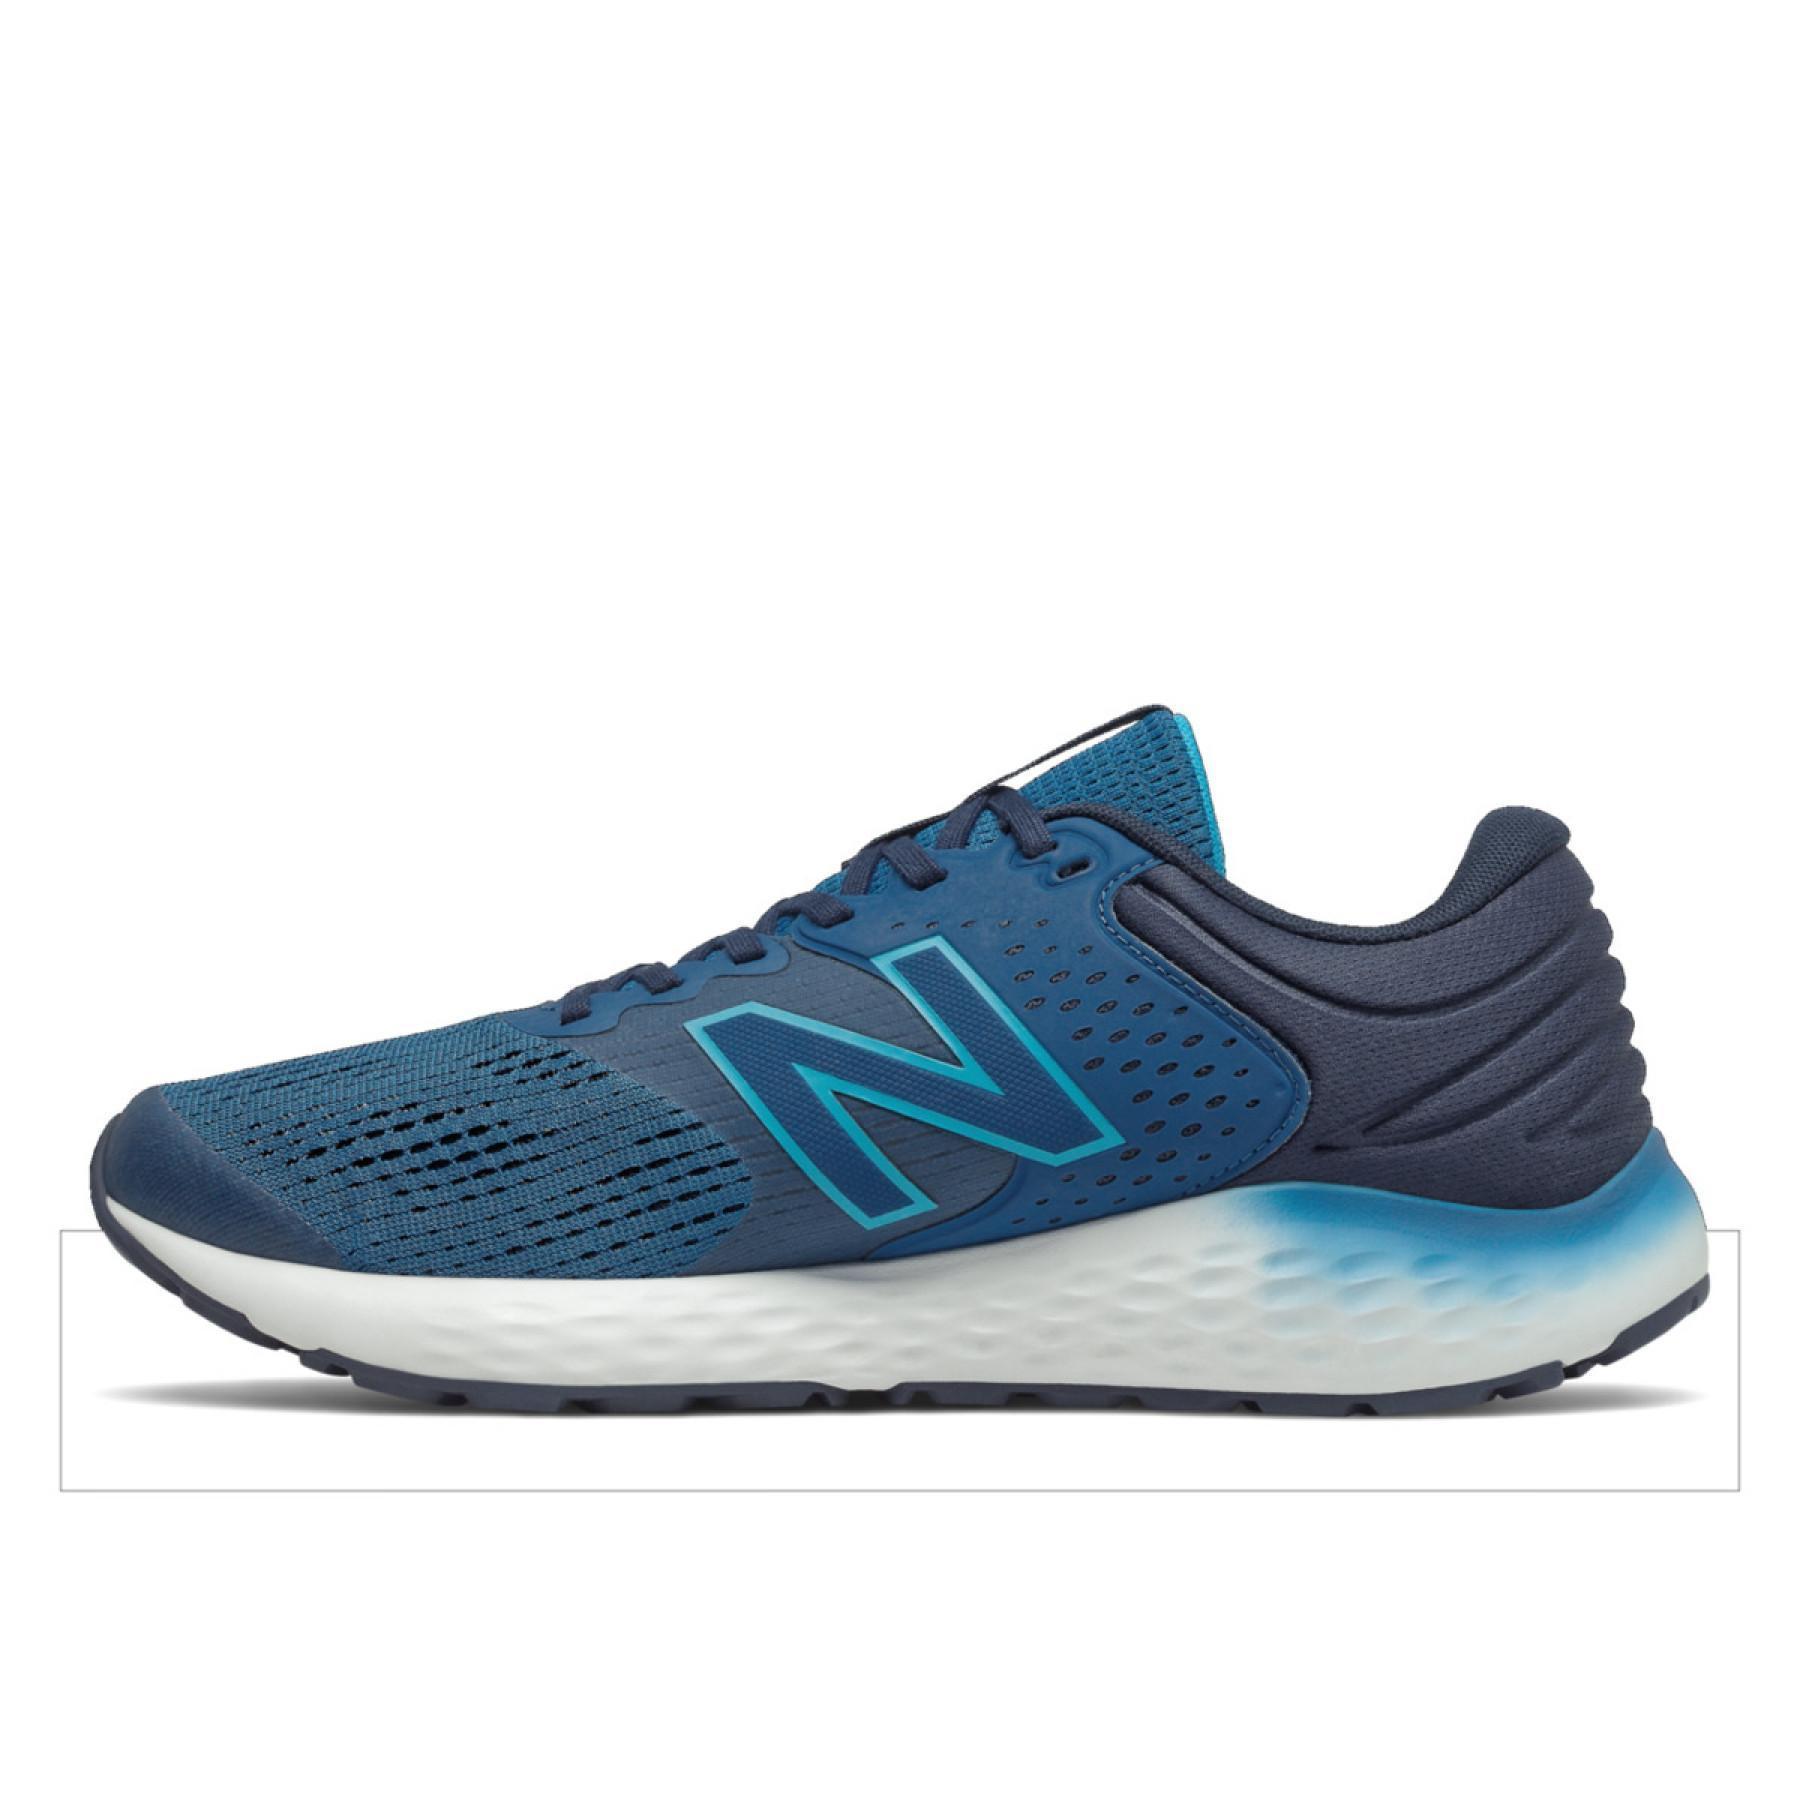 Schuhe New Balance 520v7